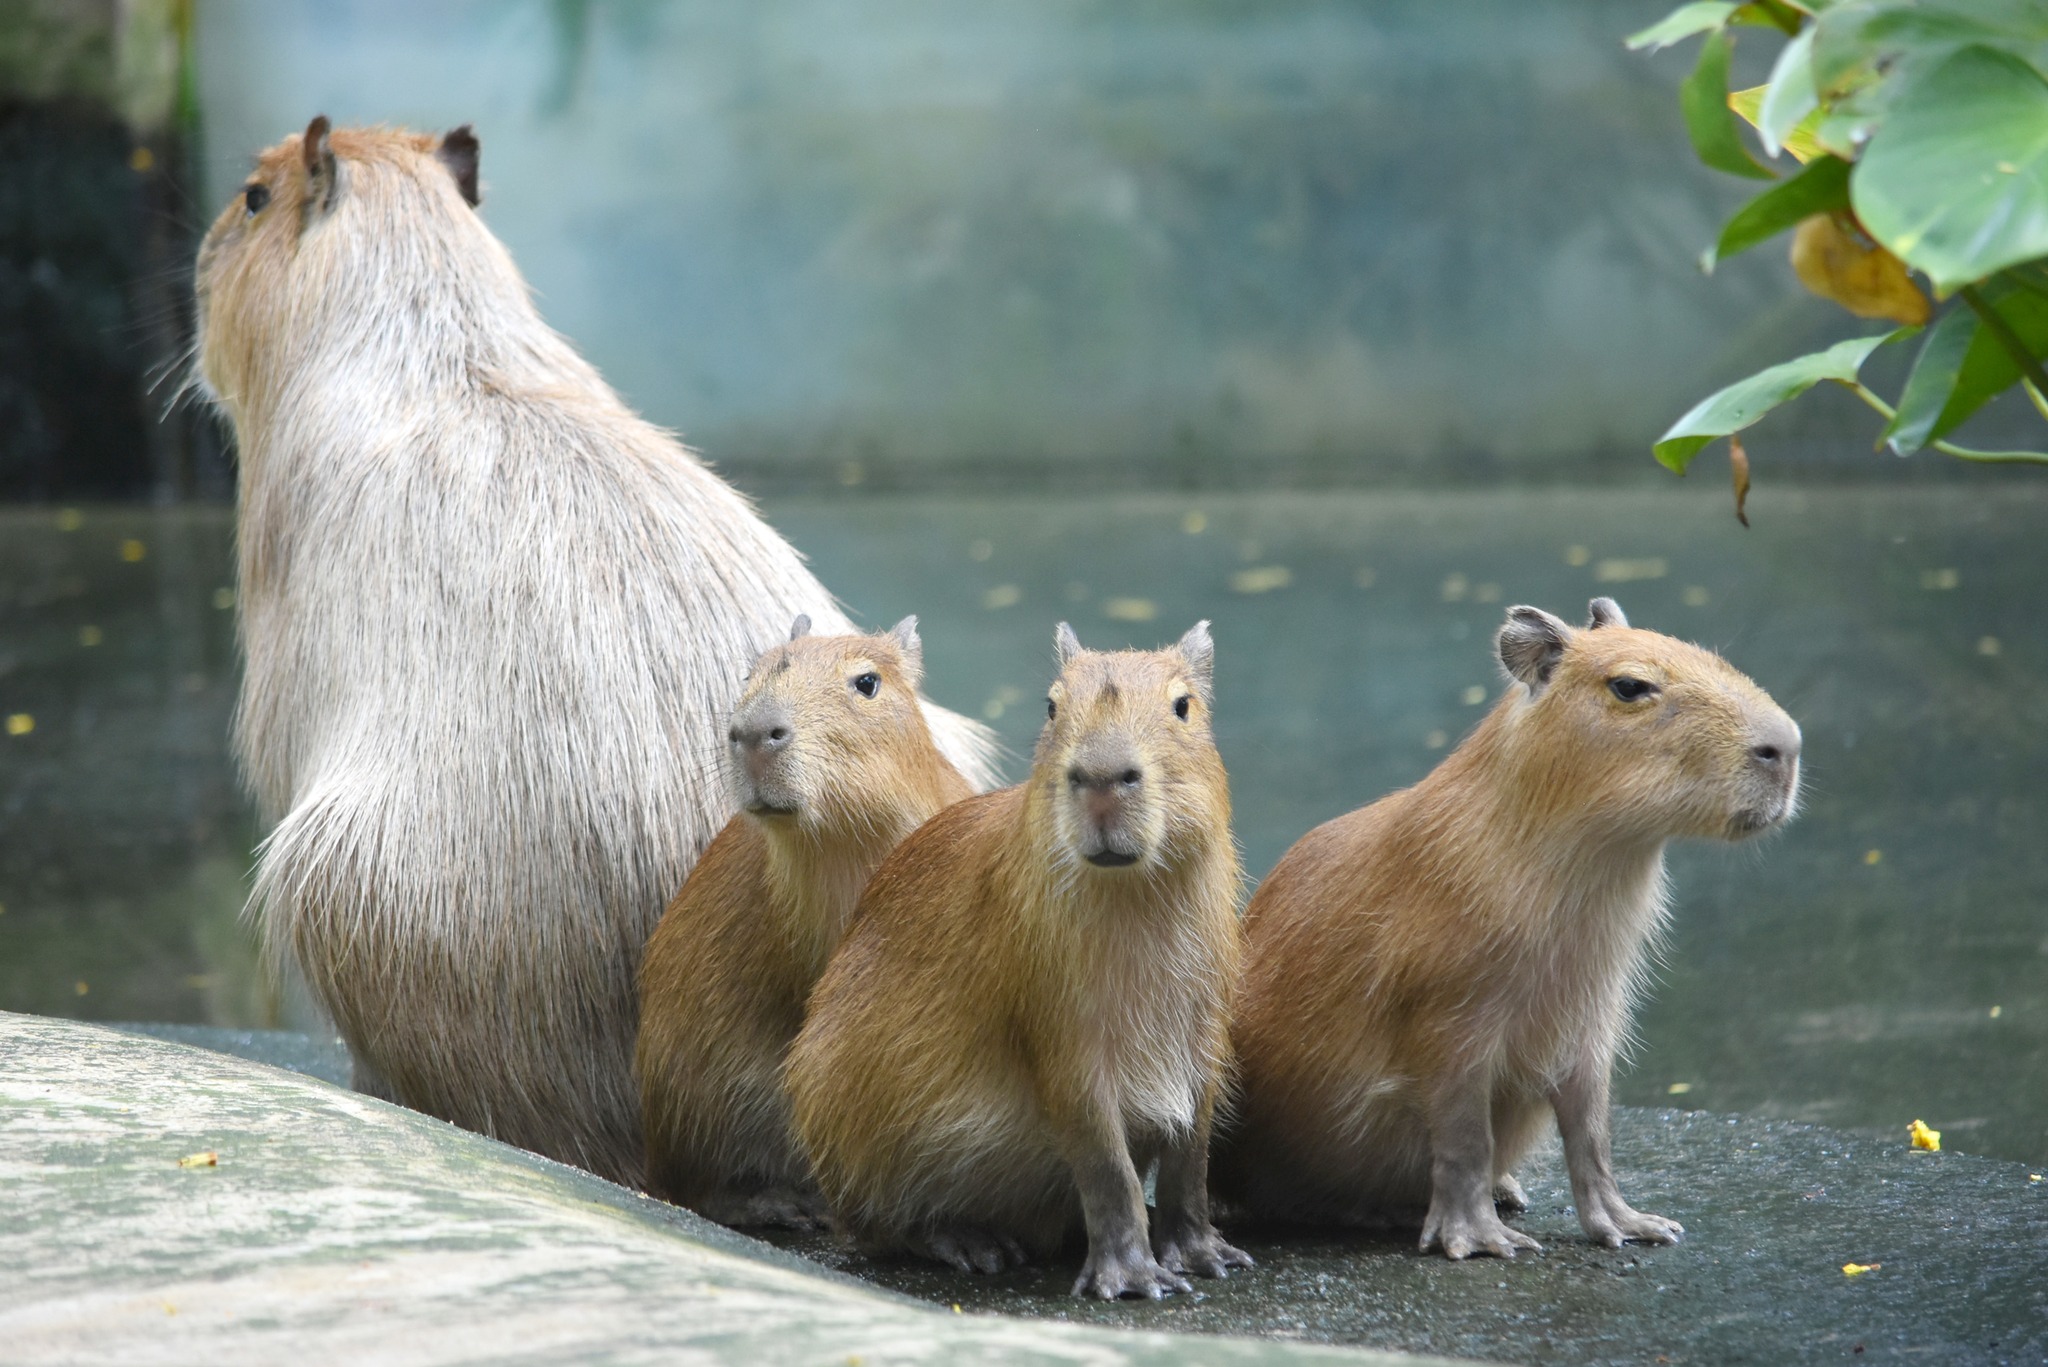 Capybara, capybara, capybara! World's favorite rodent returns to Prague Zoo  - Prague, Czech Republic